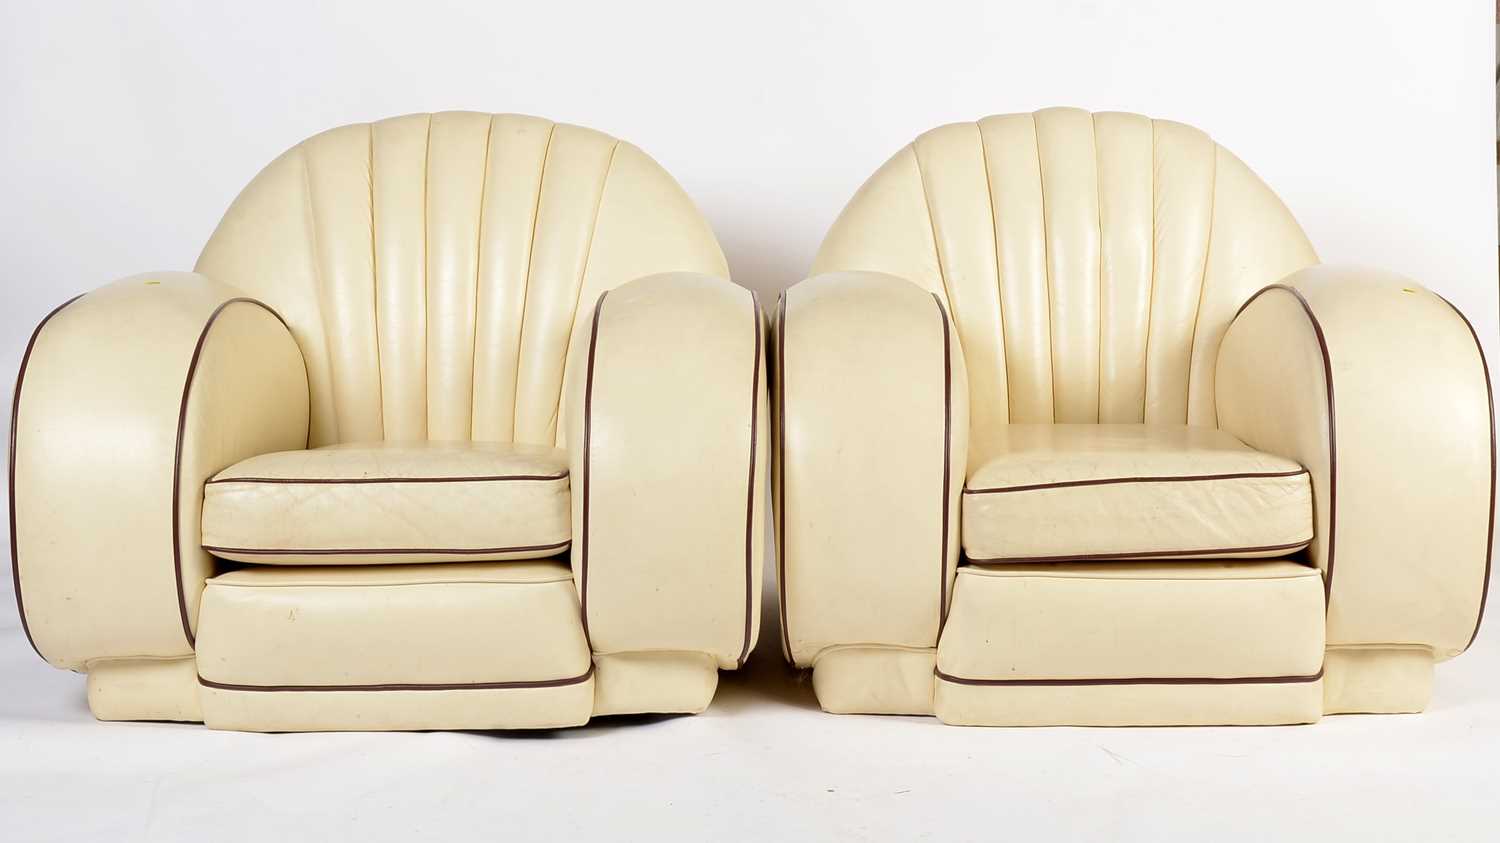 An Art Deco Cloud sofa three piece suite - Image 9 of 21